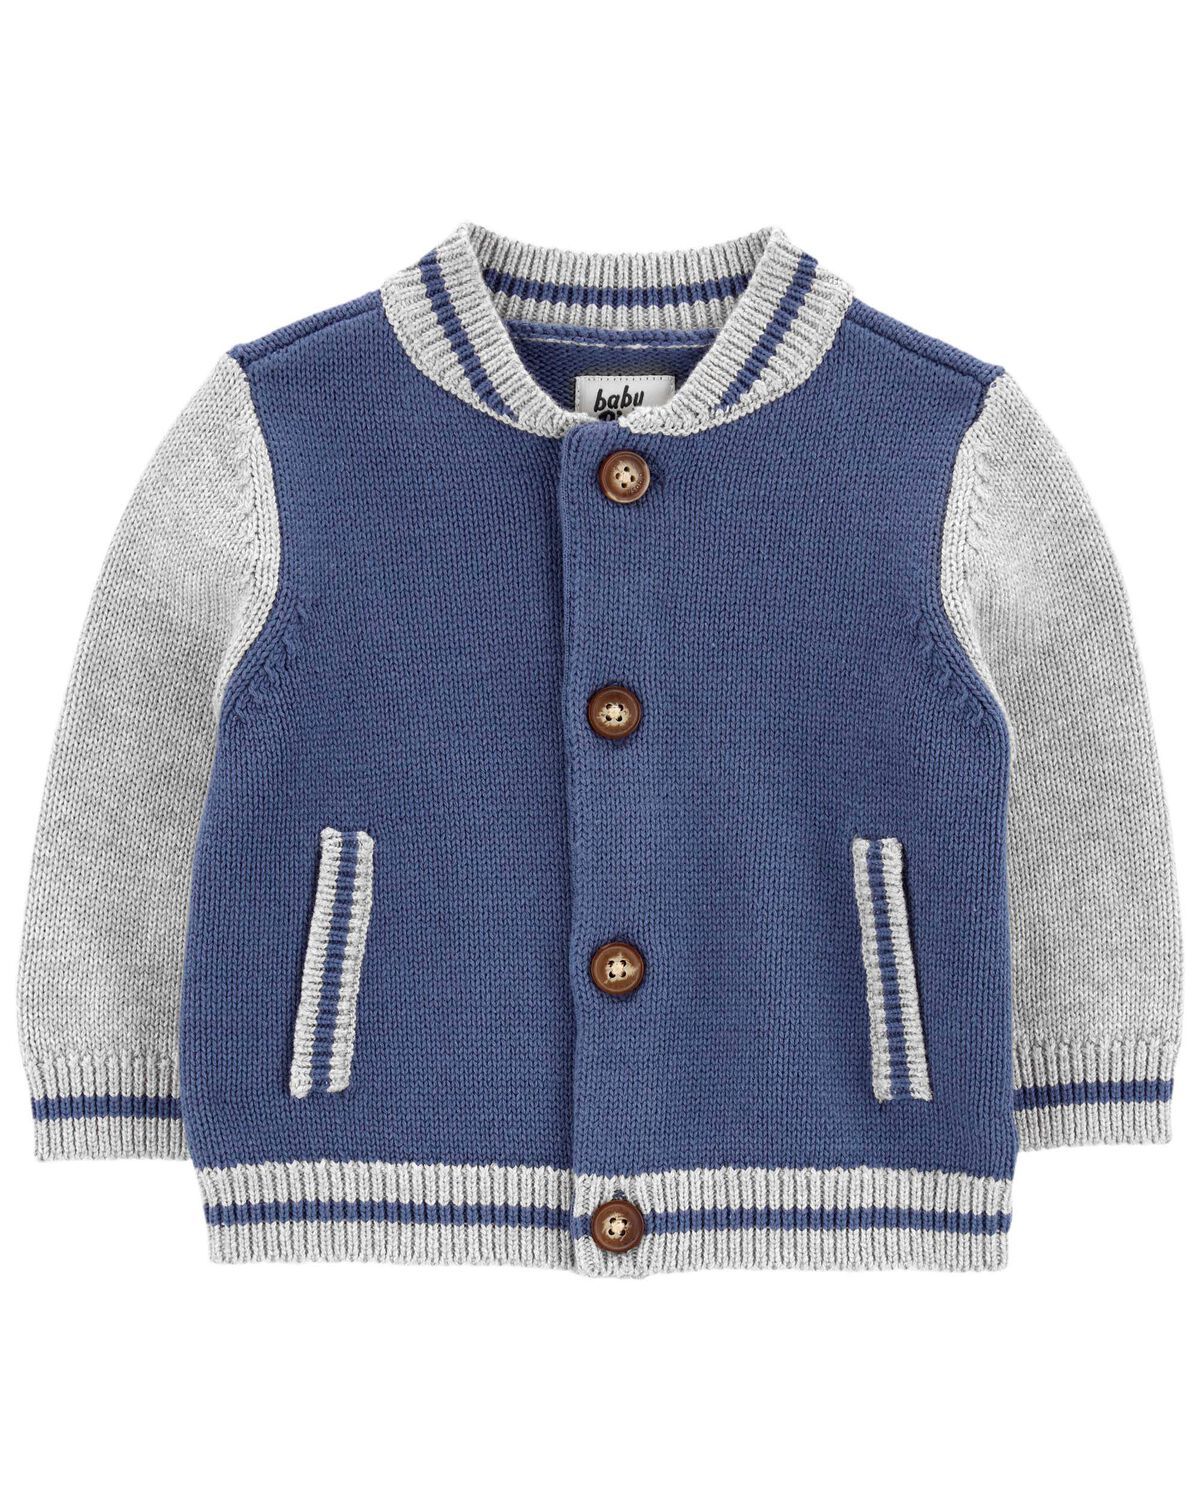 Blue Baby Sweater Knit Varsity Jacket | carters.com | Carter's